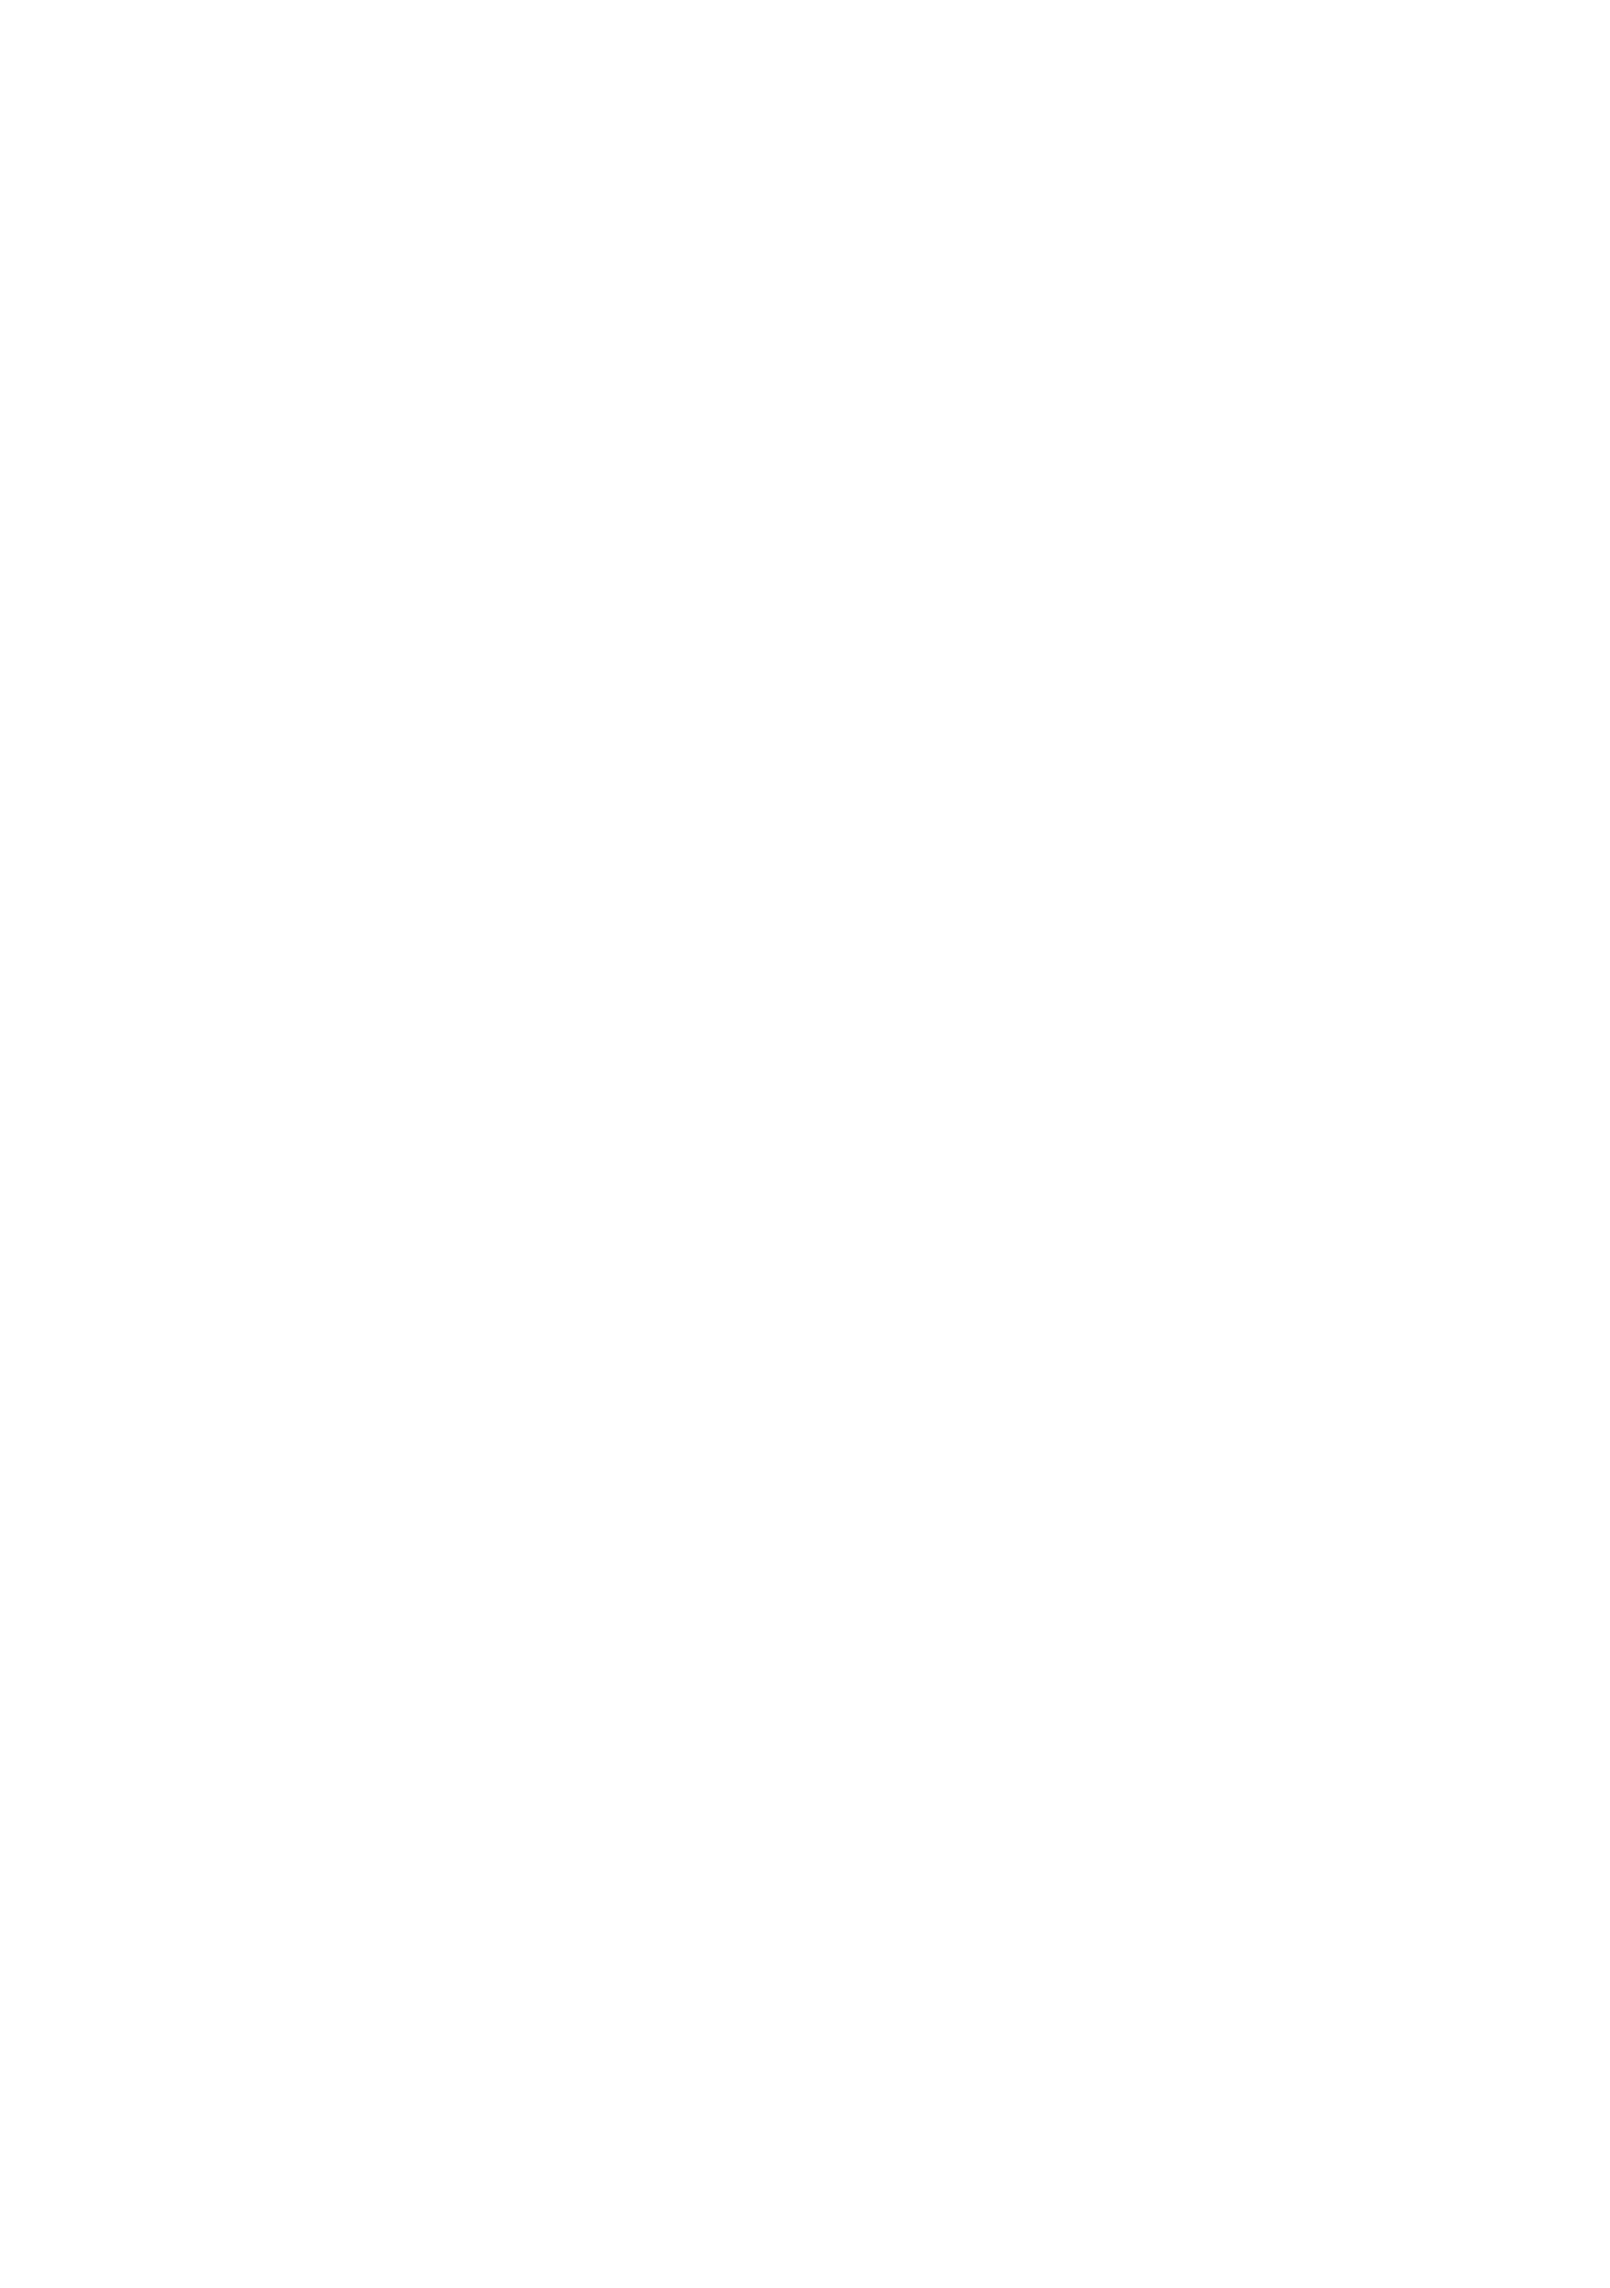 95-956706_barbara-livingston-map-marker-icon-logo-of-location